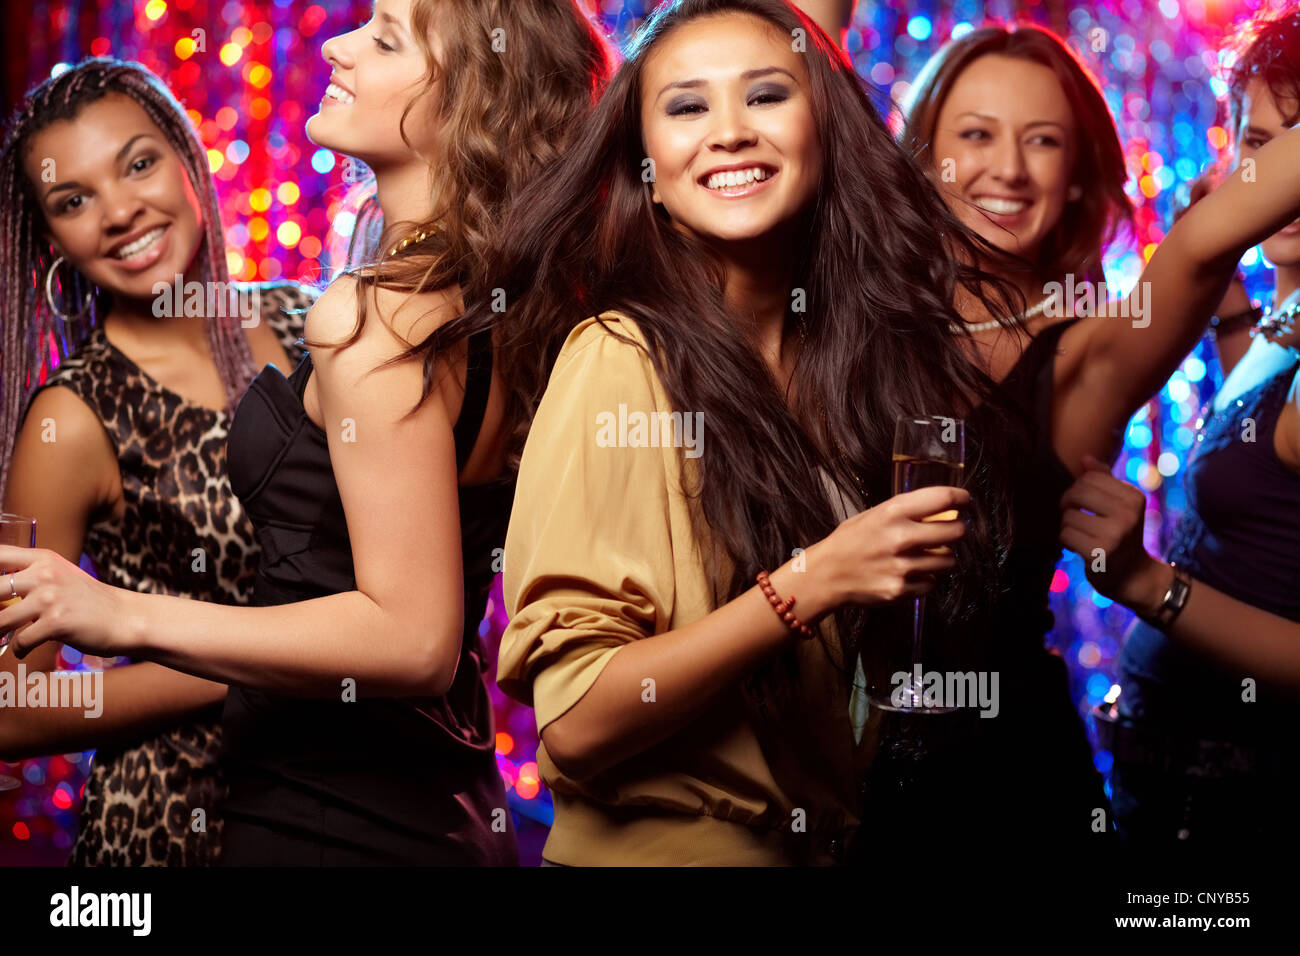 Girls having fun at club tonight Stock Photo - Alamy